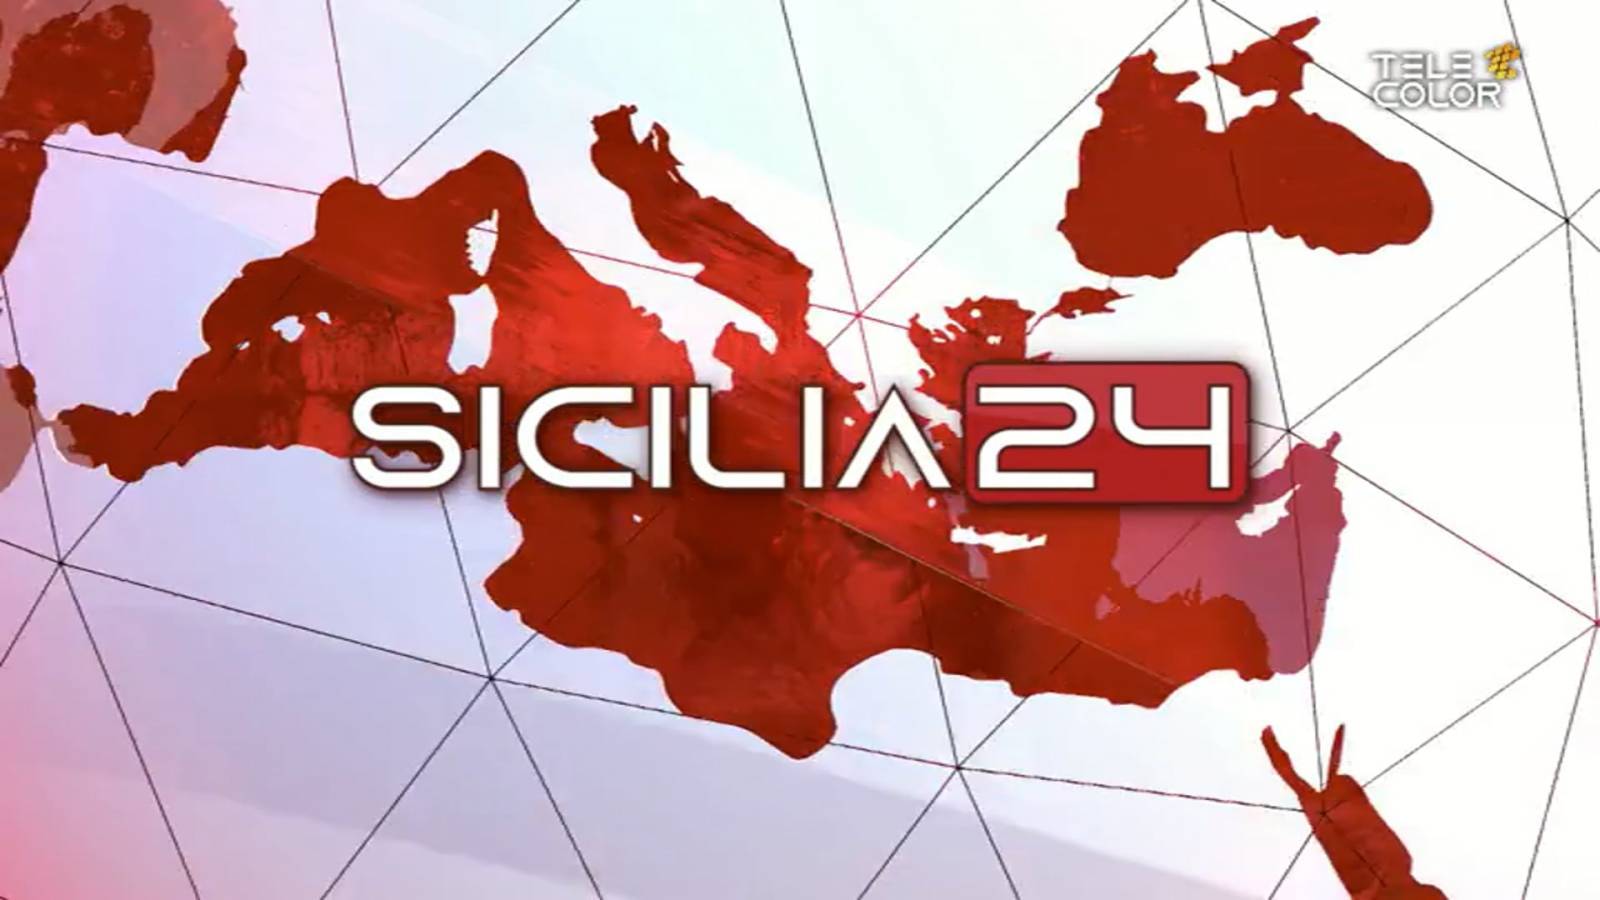 sicilia24-rassegna-stampa-01-maggio-2022-vimeo-thumbnail.jpg